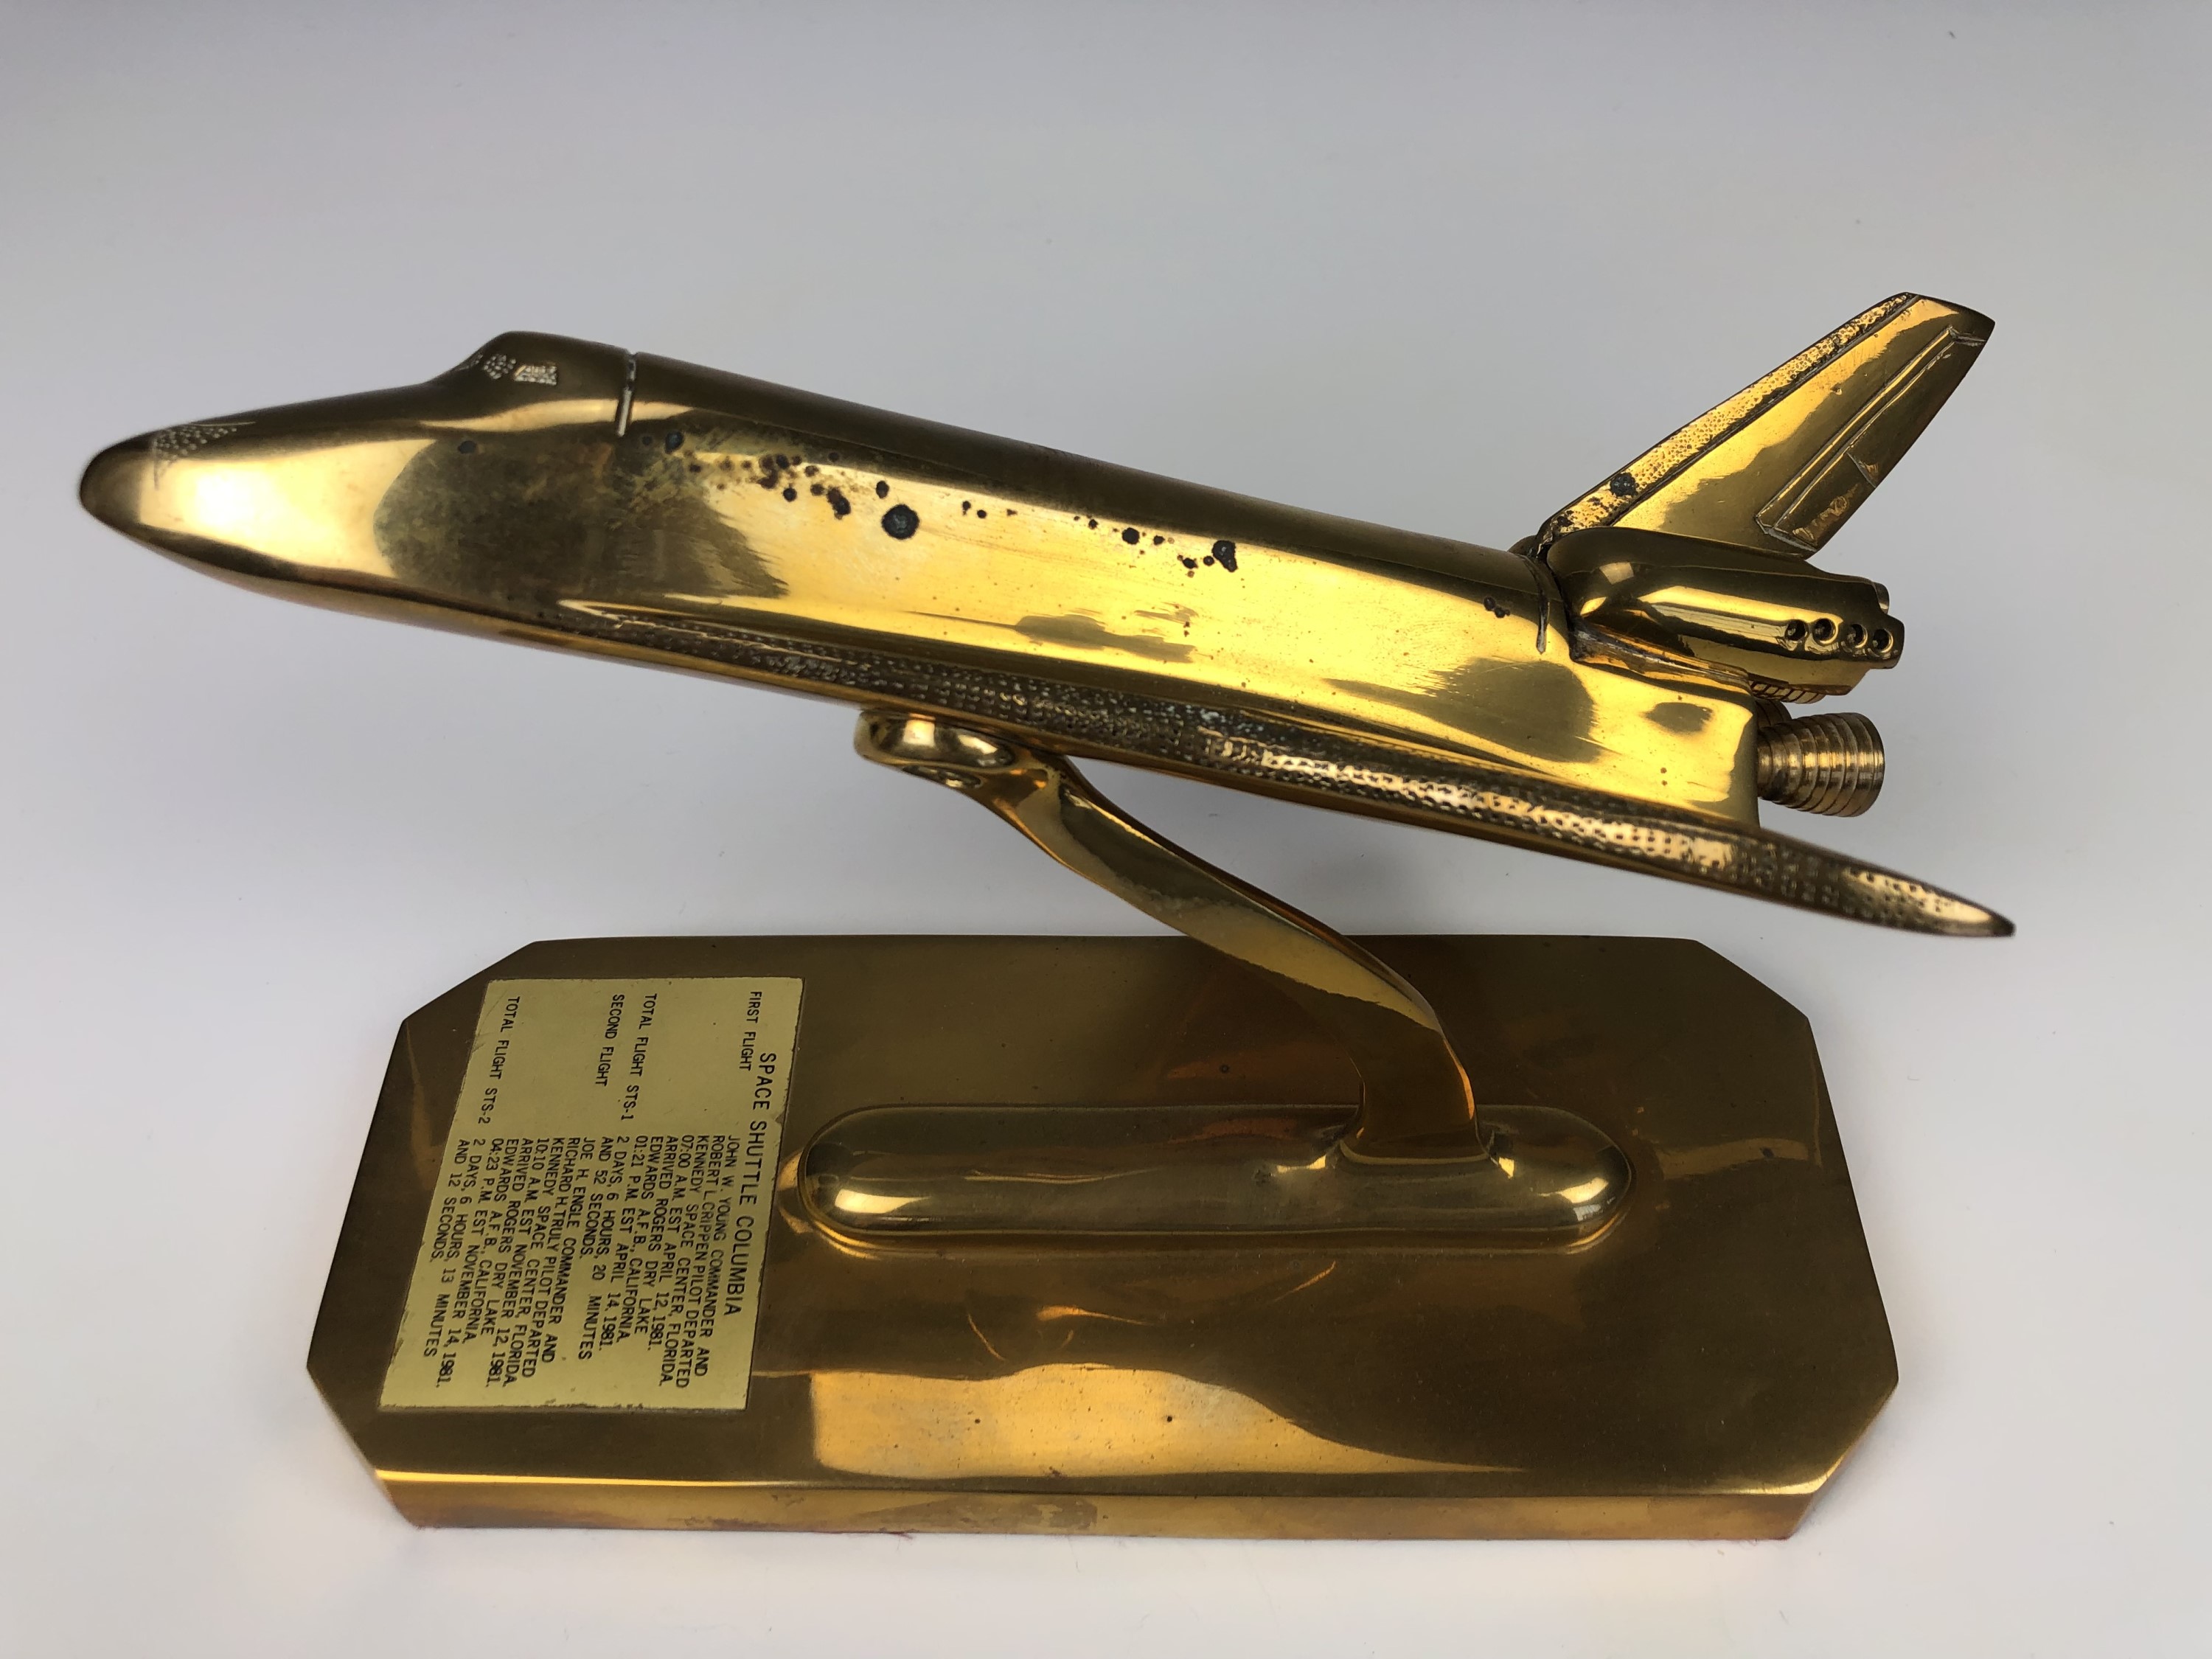 A brass desk model of the Space Shuttle Columbia, 24 cm x 10 cm x 17 cm high